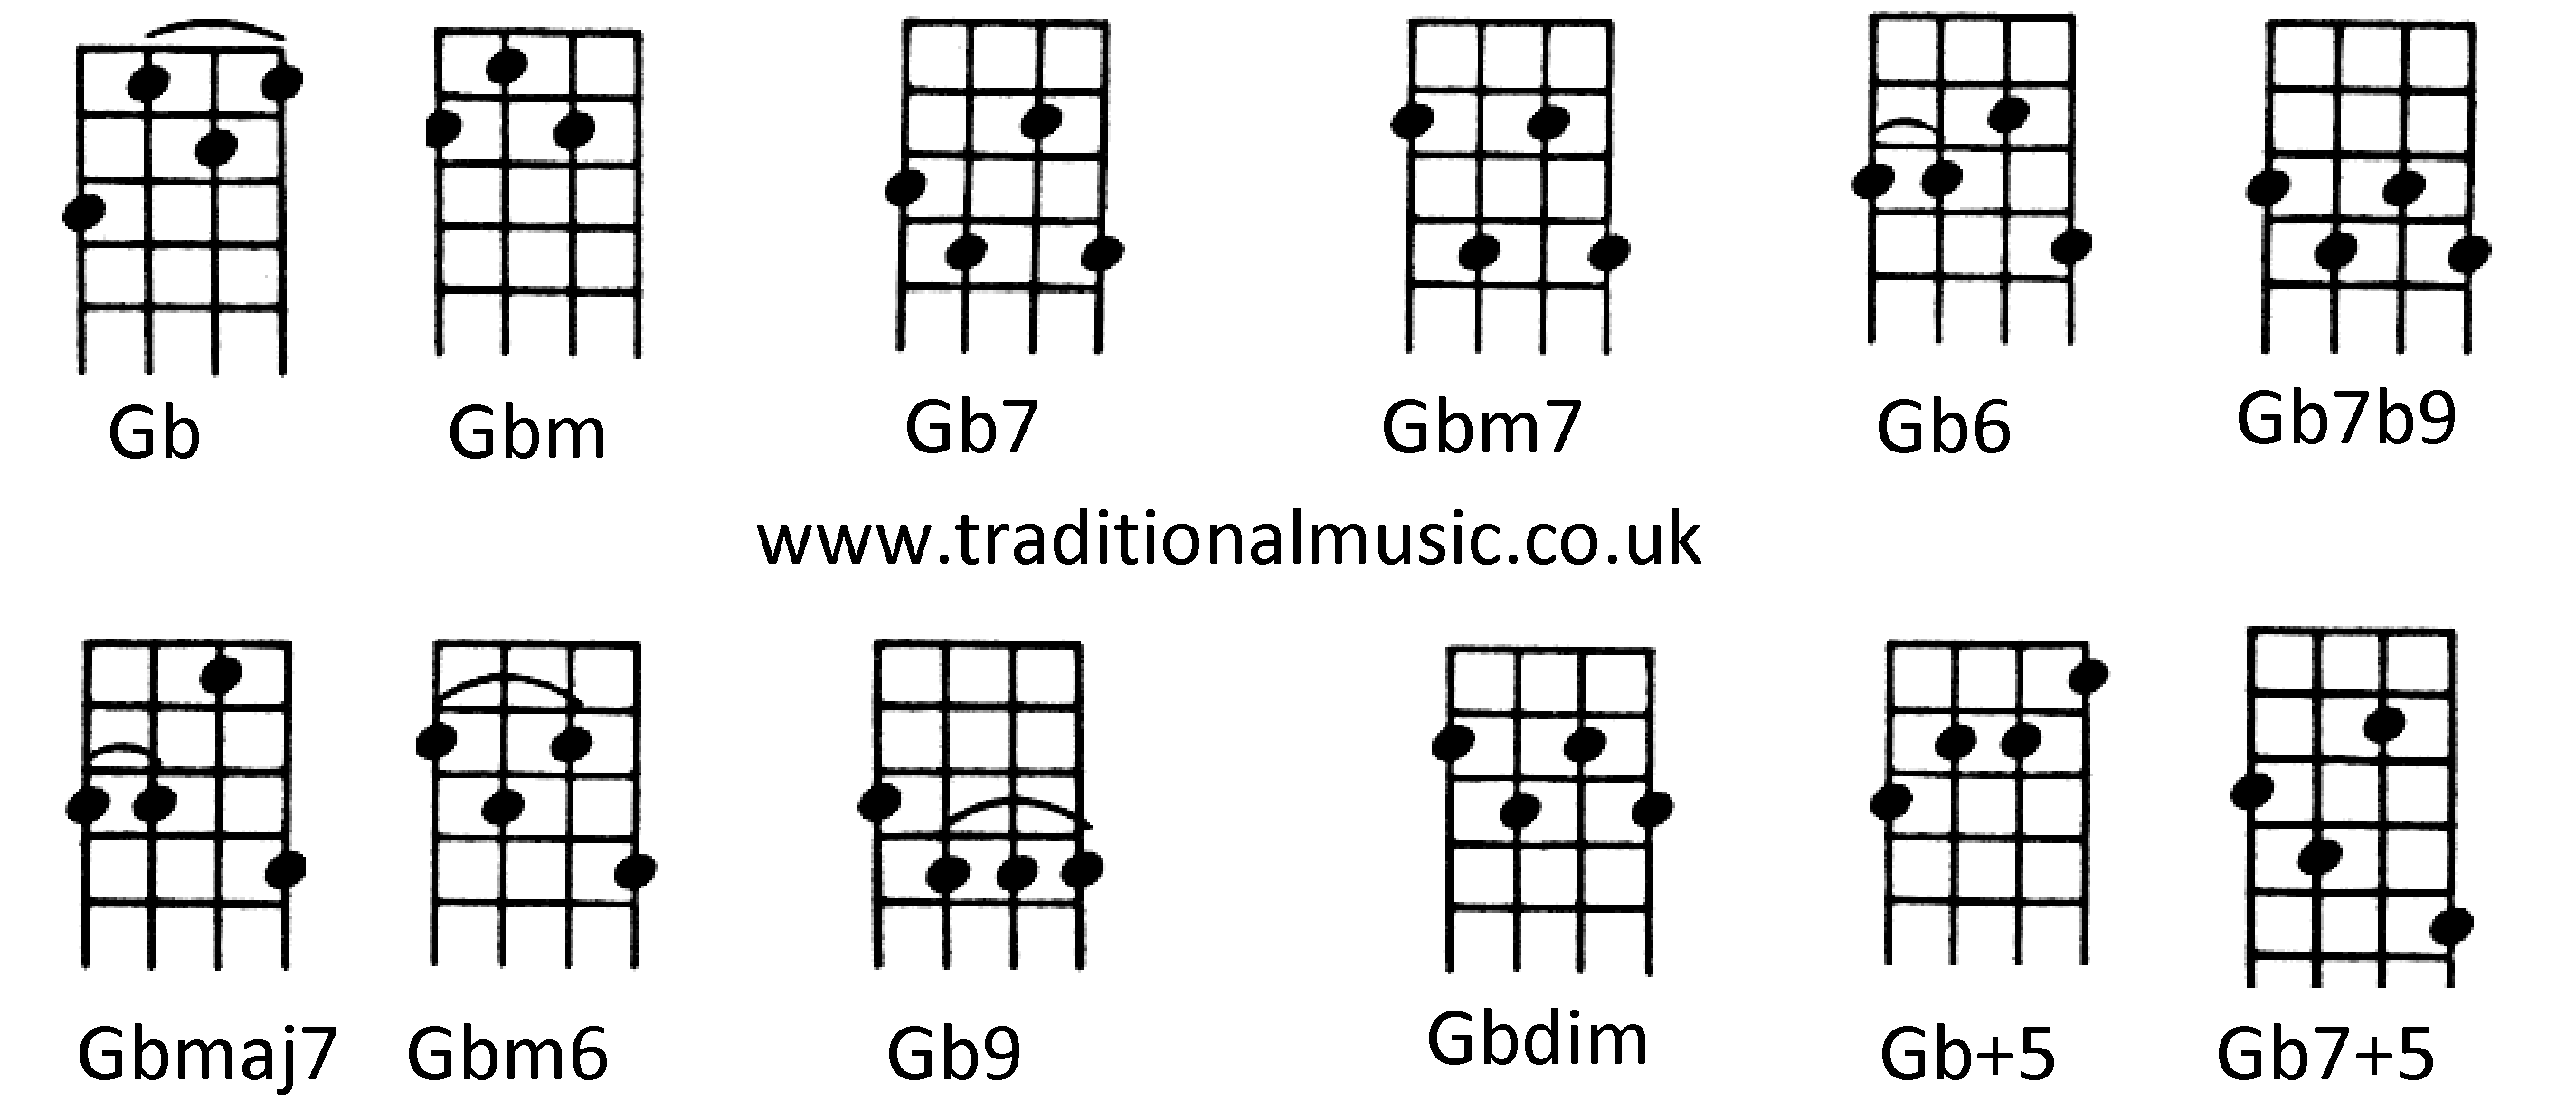 Chords for Ukulele (C tuning)Gb Gbm Gb7 Gbm7 Gb6 Gb7b9 Gbmaj7 Gbm6 Gb9 Gbdim Gb+5 Gb7+5